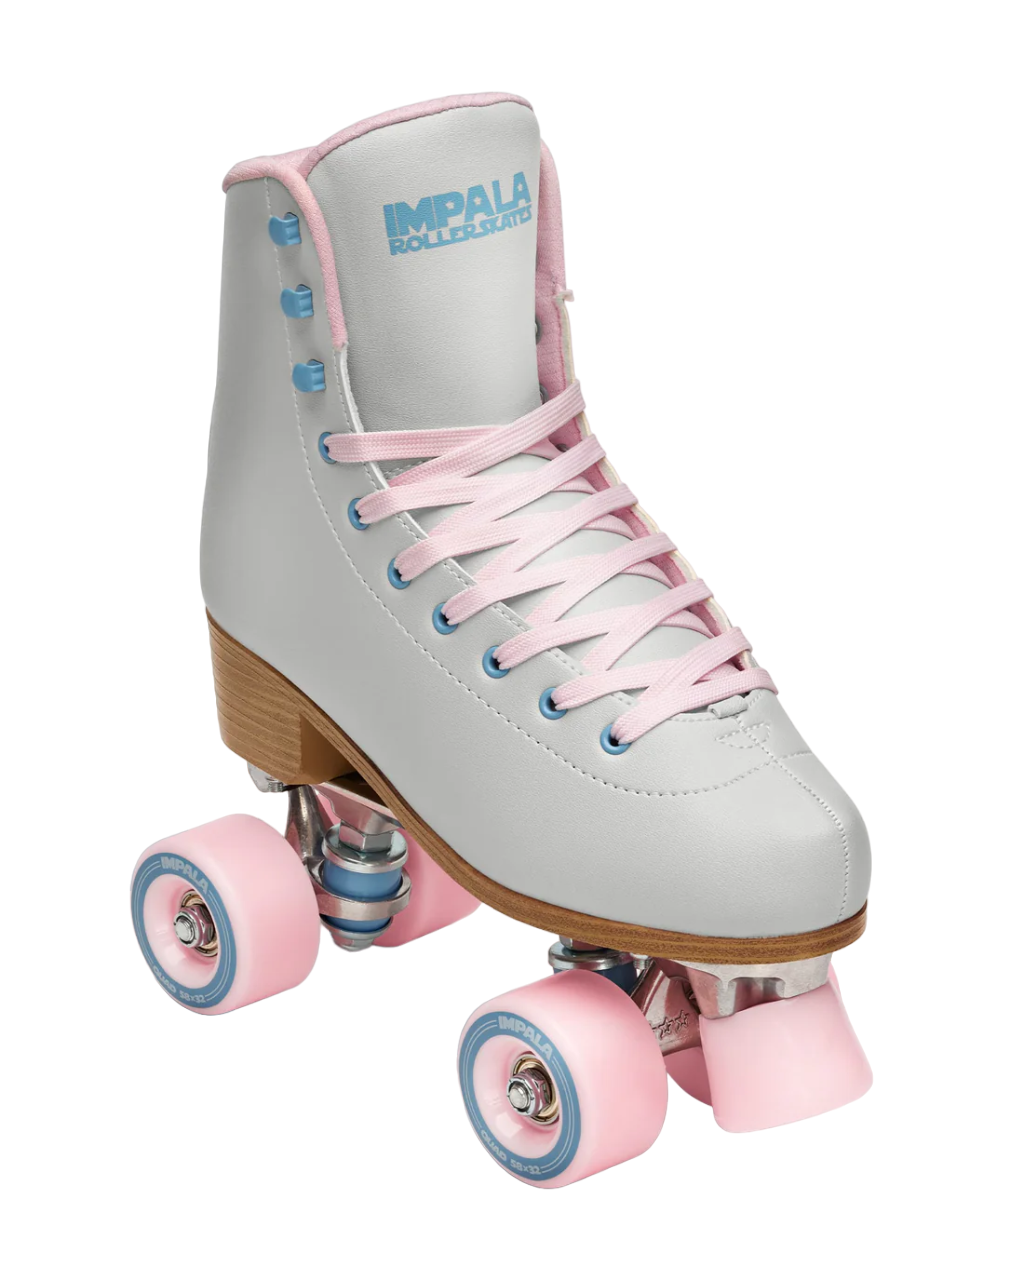 Impala Quad Roller Skates - Smokey Grey